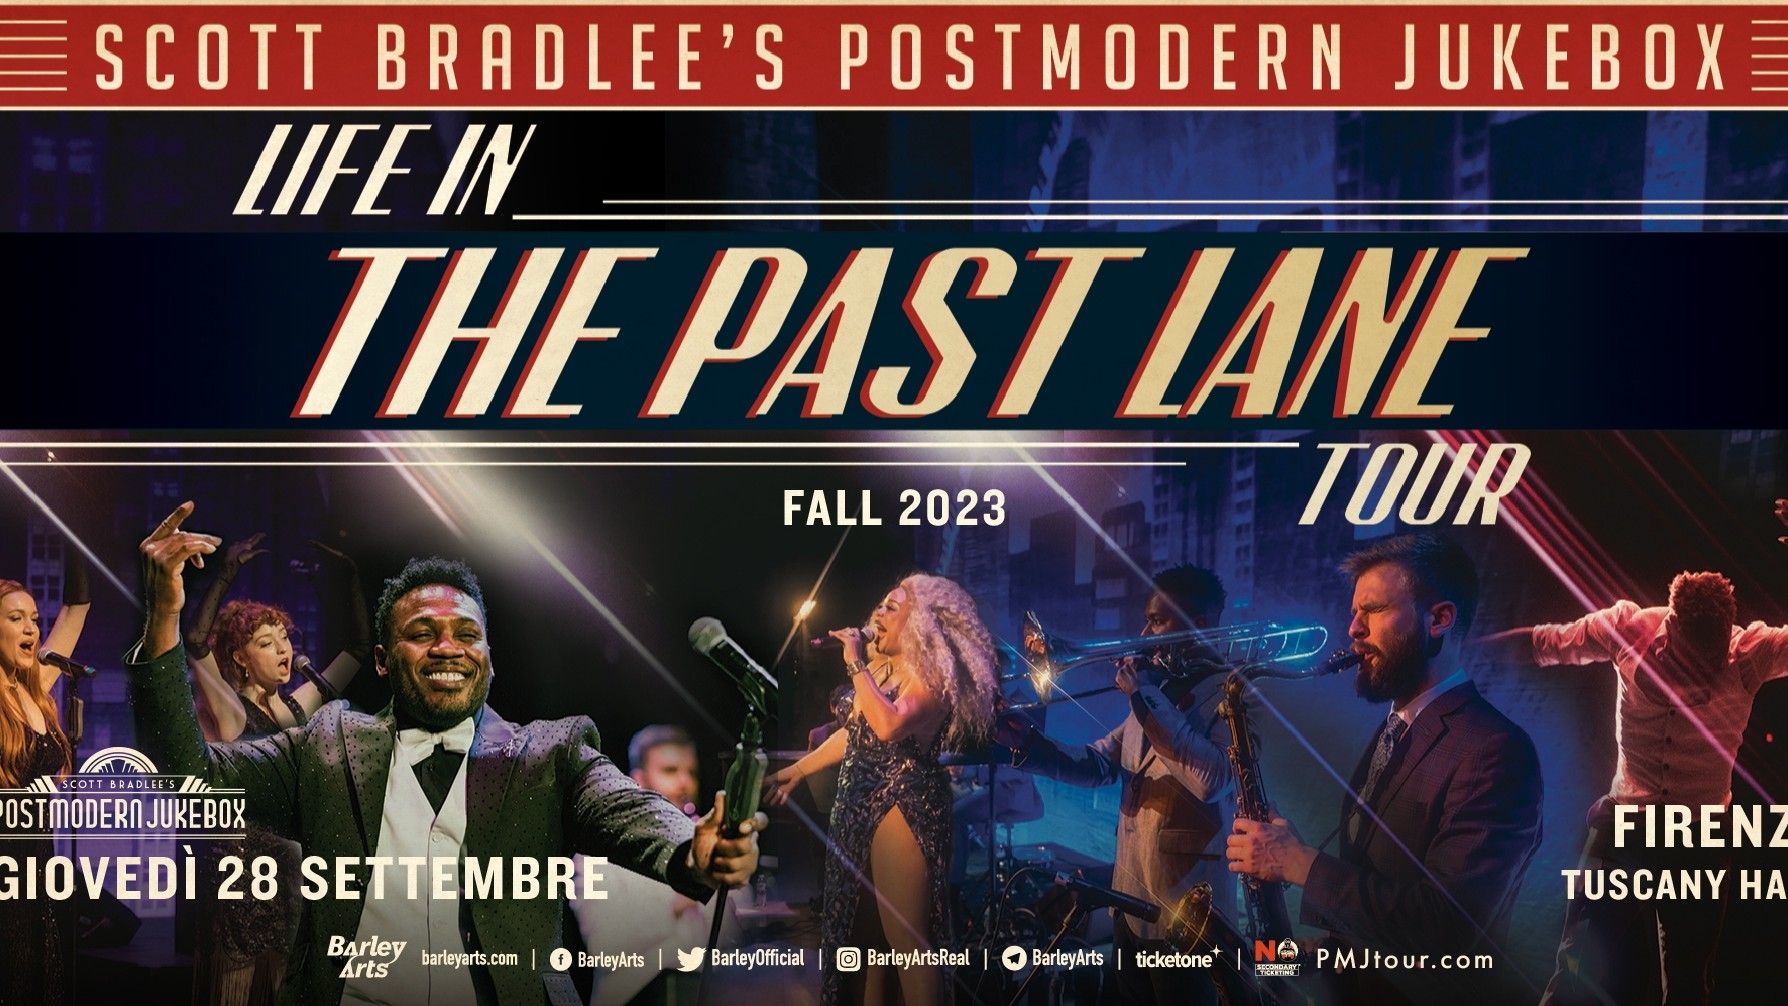 Scott Bradlee’s Postmodern Jukebox - Life In The Past Lane Tour